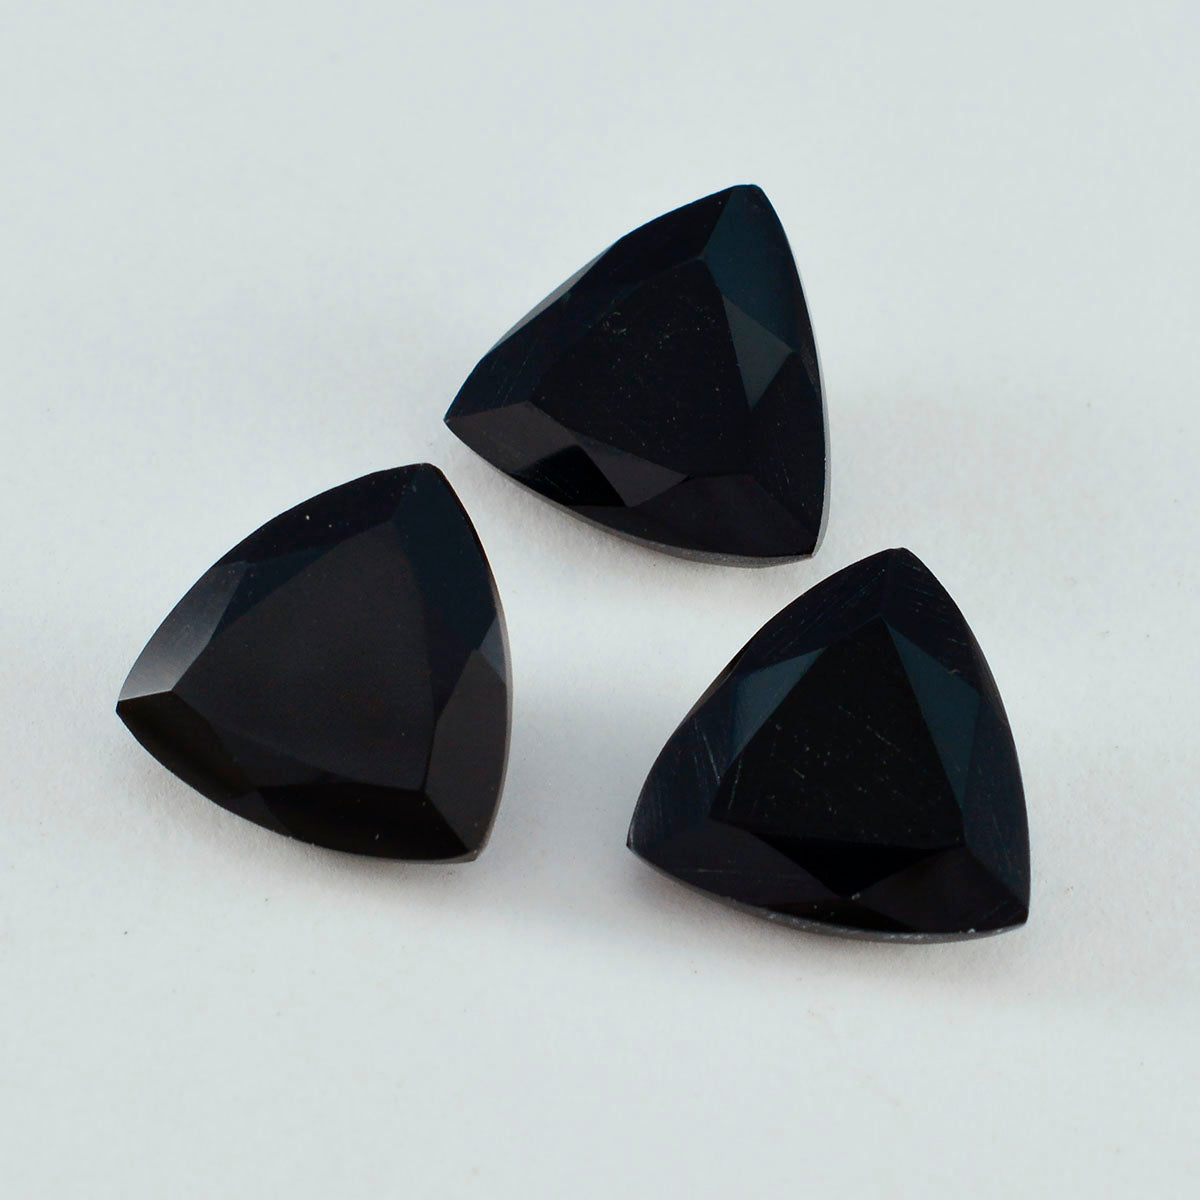 Riyogems 1PC Real Black Onyx Faceted 14x14 mm Trillion Shape nice-looking Quality Gems